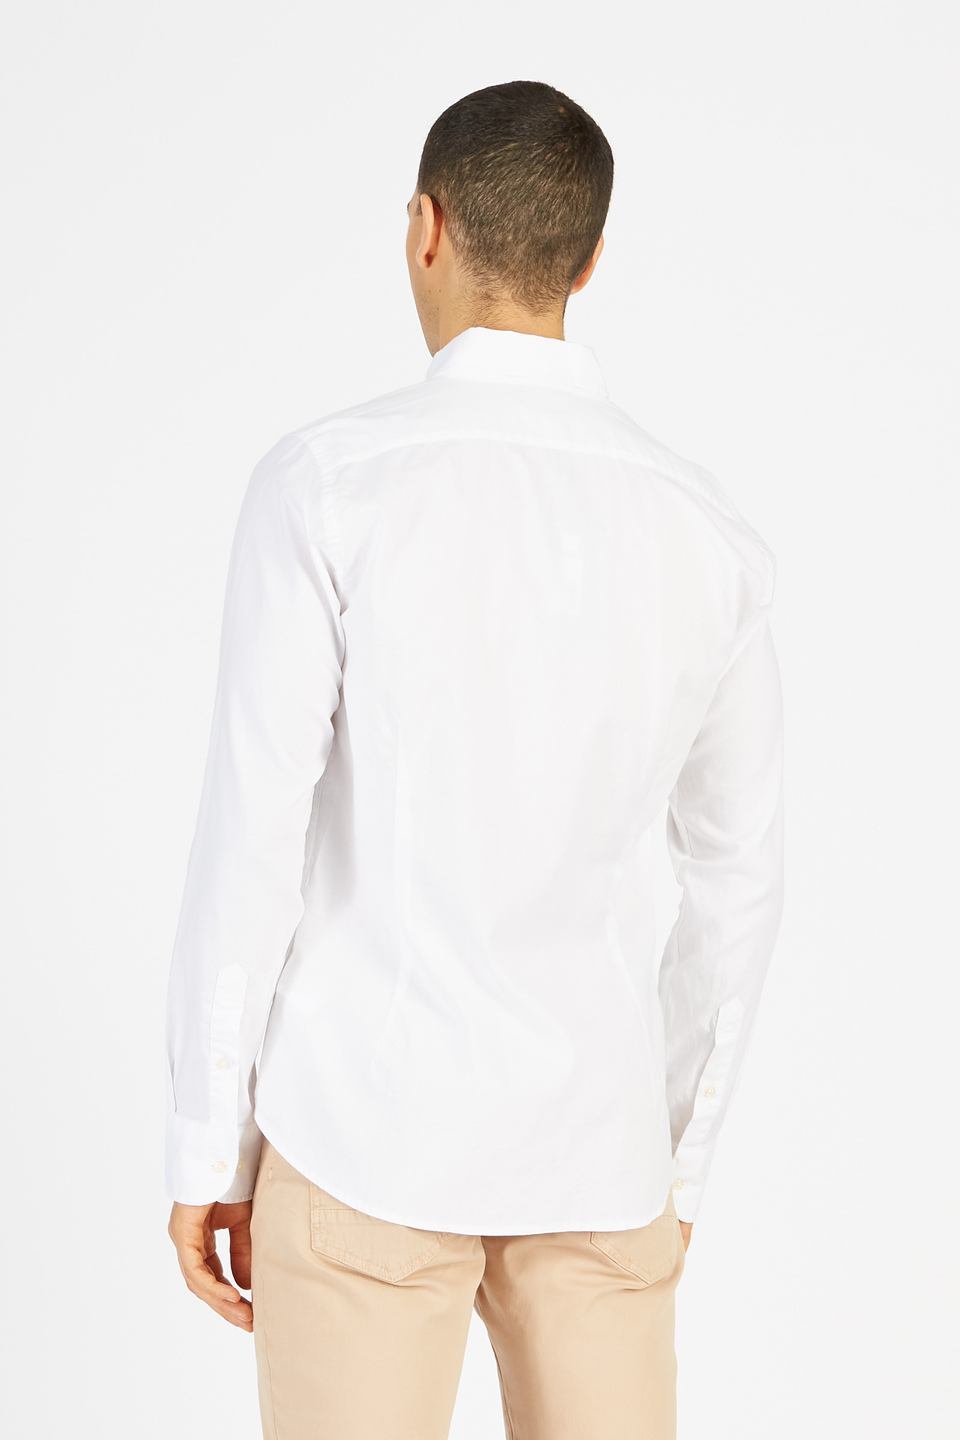 Men’s shirt in cotton slim fit long sleeves | La Martina - Official Online Shop